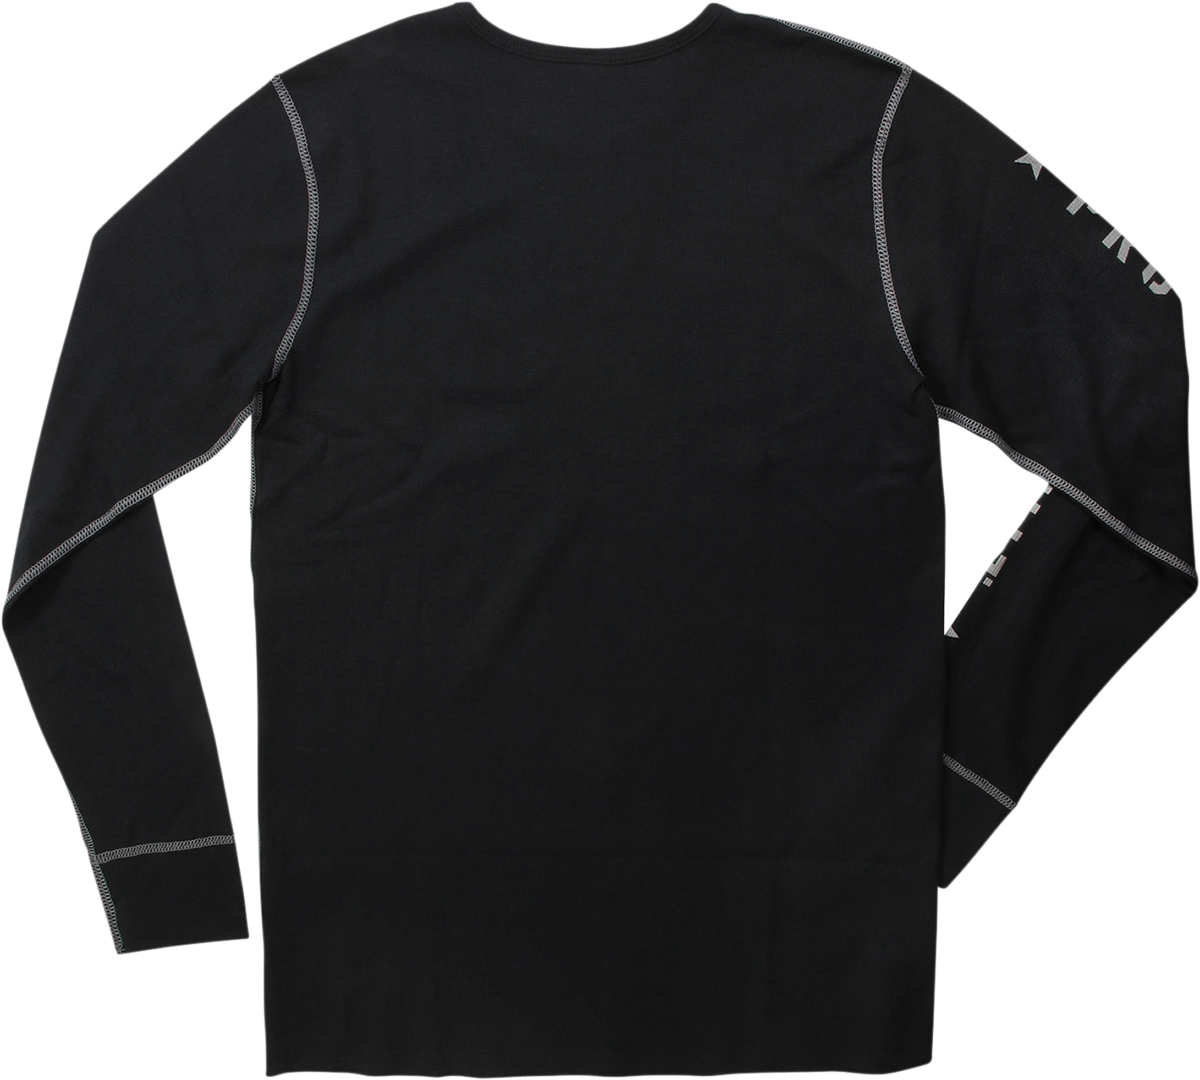 PRO CIRCUIT Thermal Shirt - Long-Sleeve - Black - Small 6412101-010